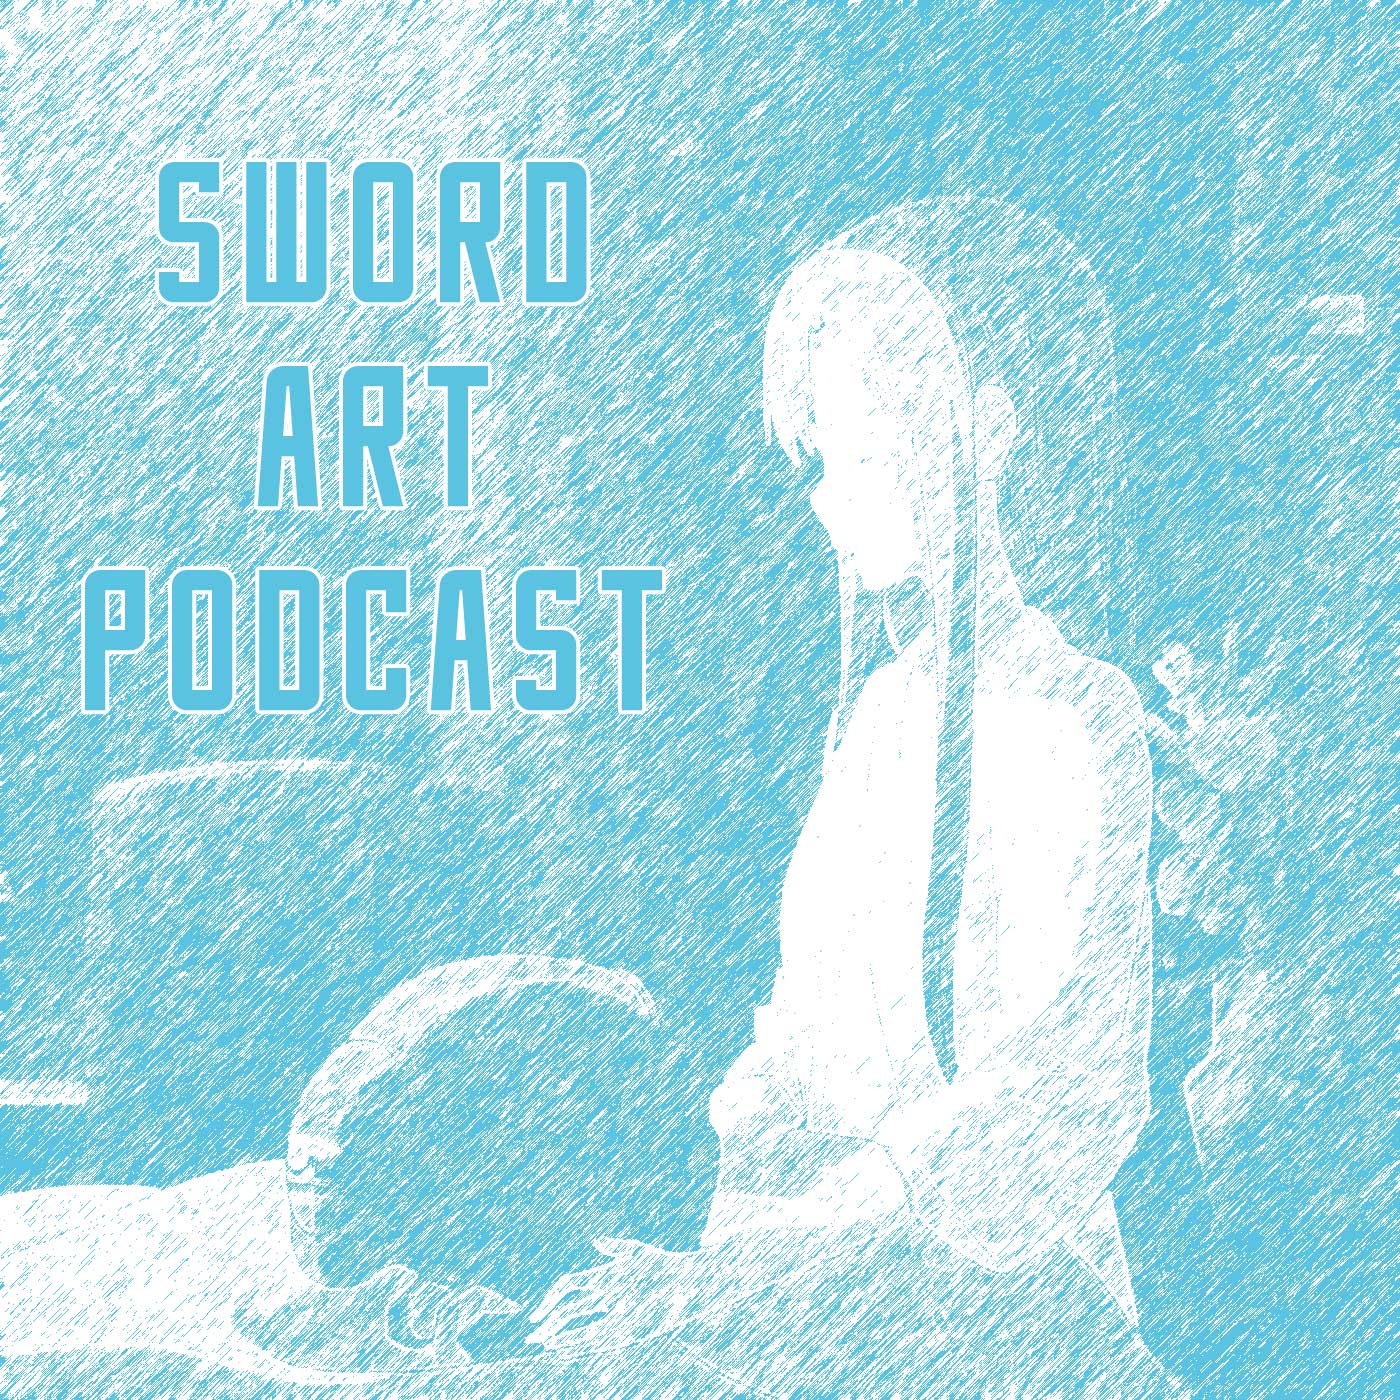 Sword Art Podcast - Season 1 - Episode 3